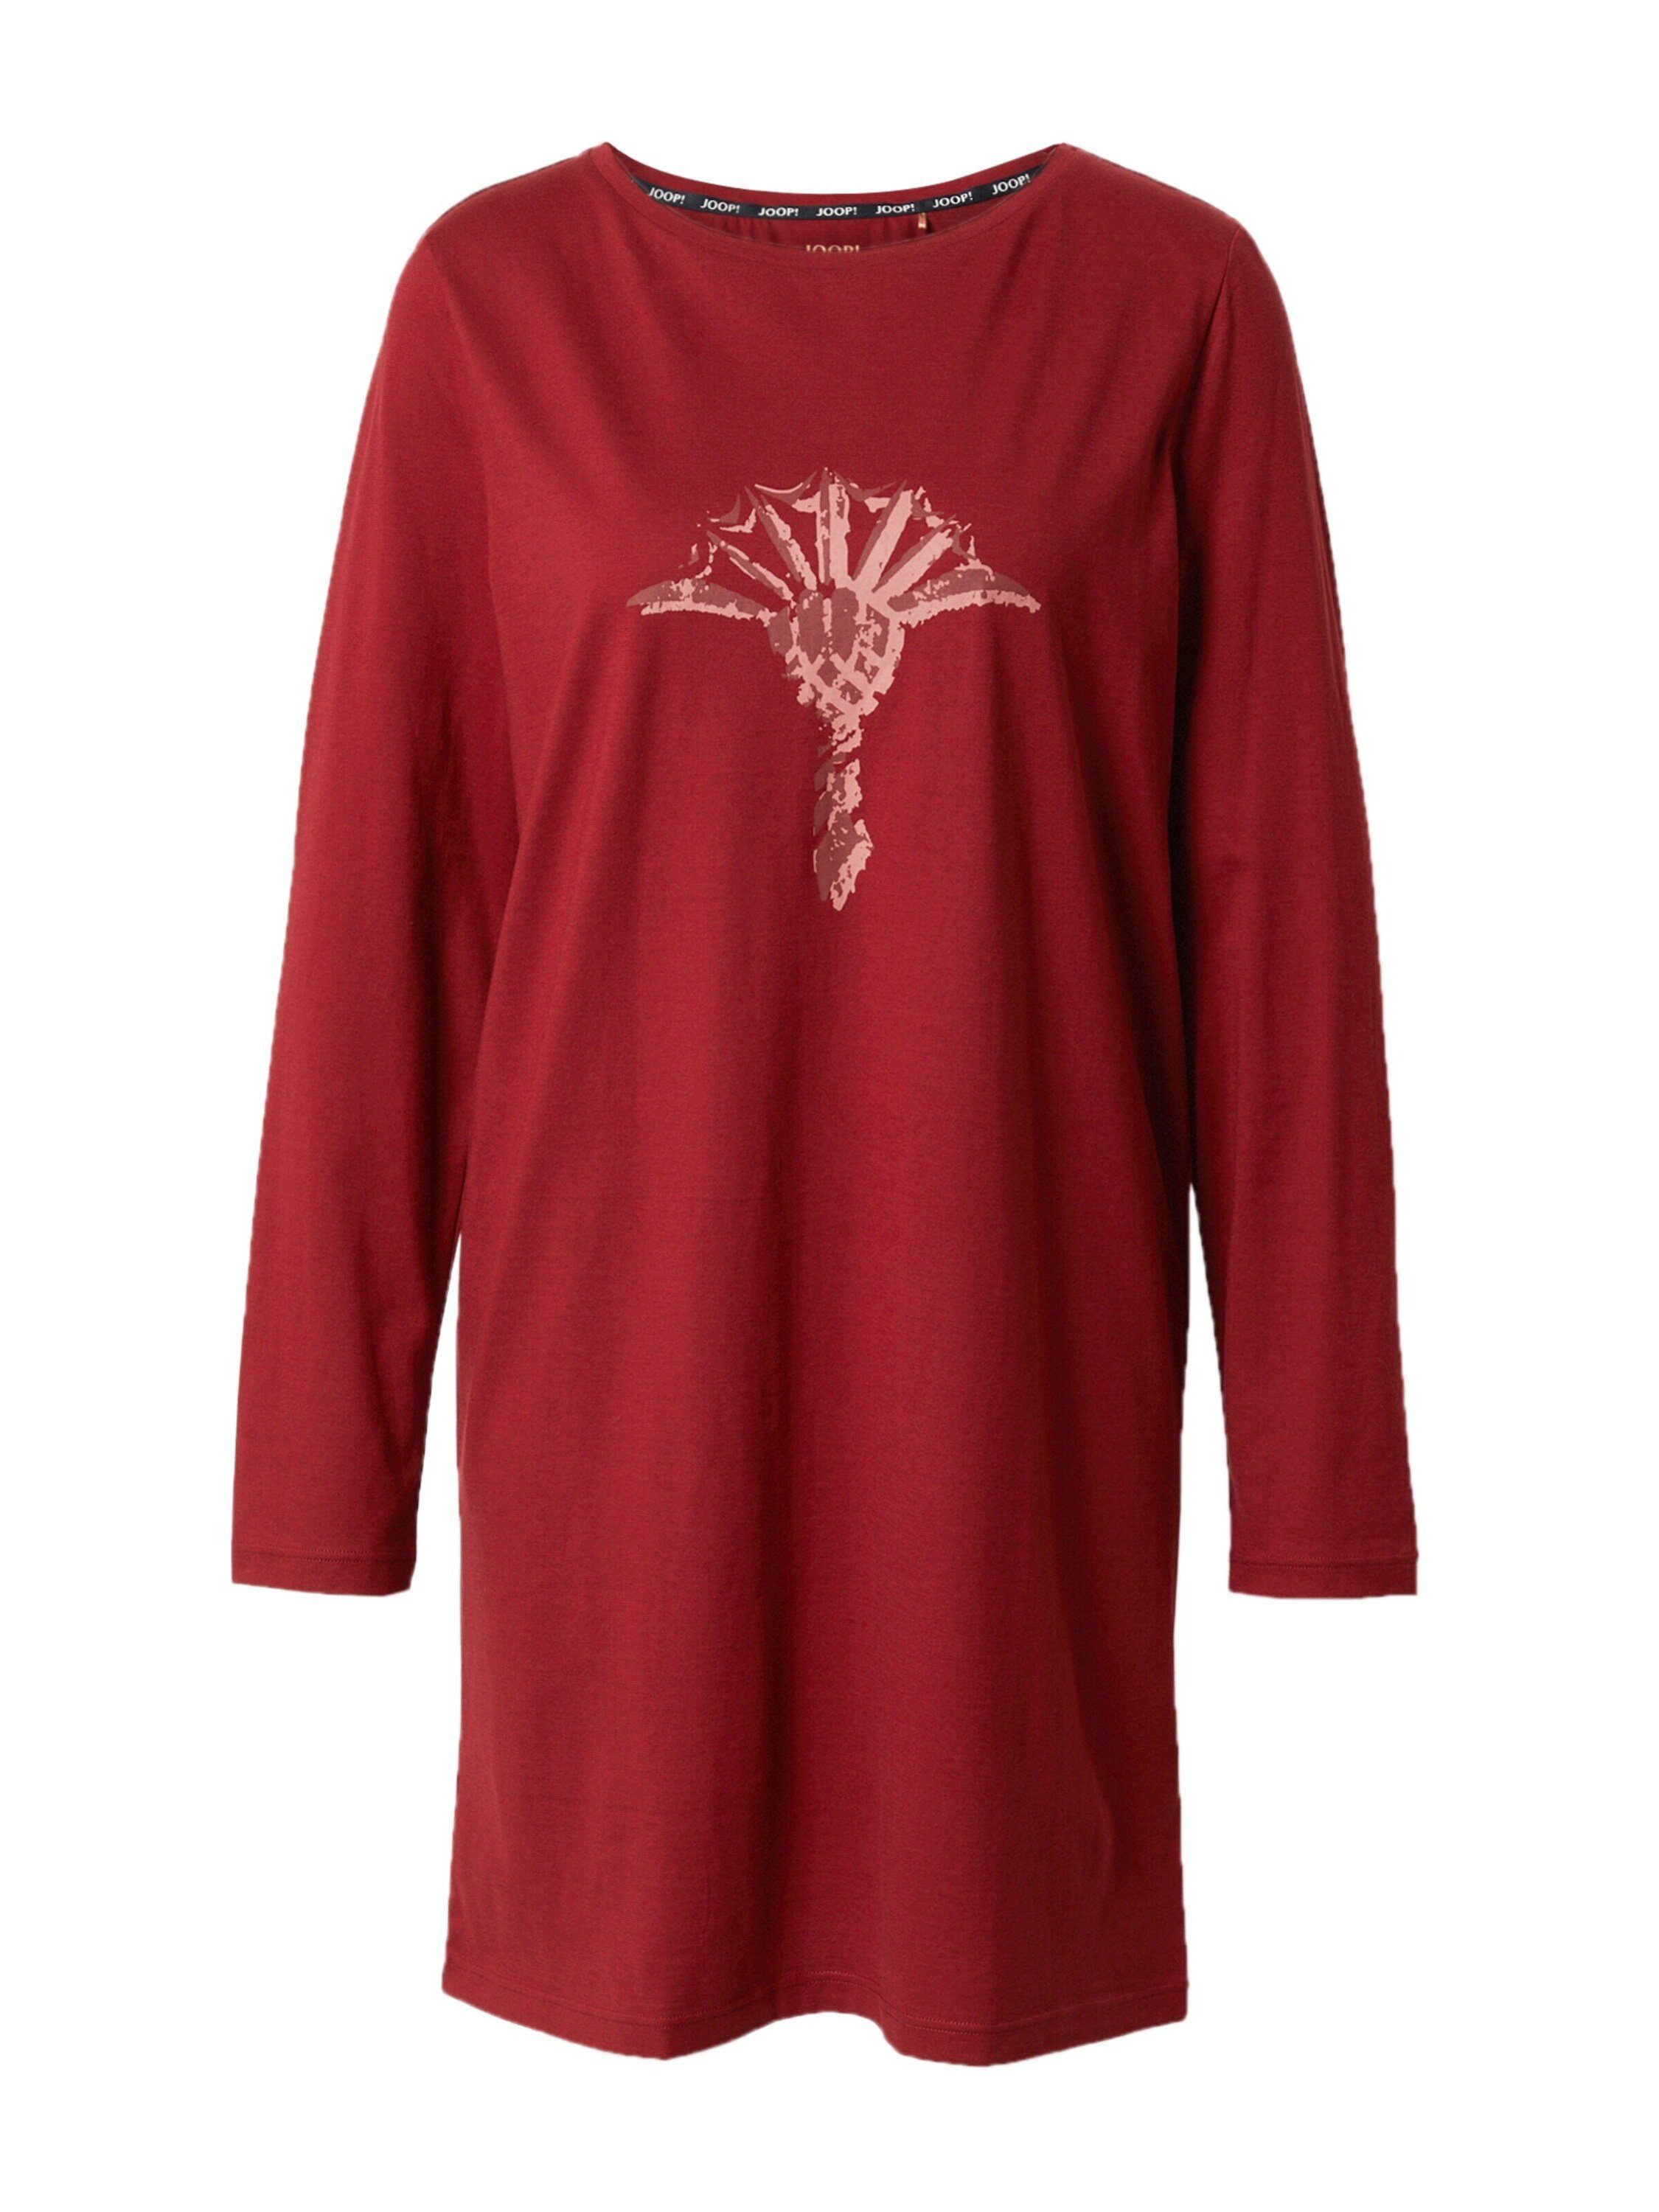 Details Joop! Kimono, Rot Plain/ohne Material: 100% Baumwolle,